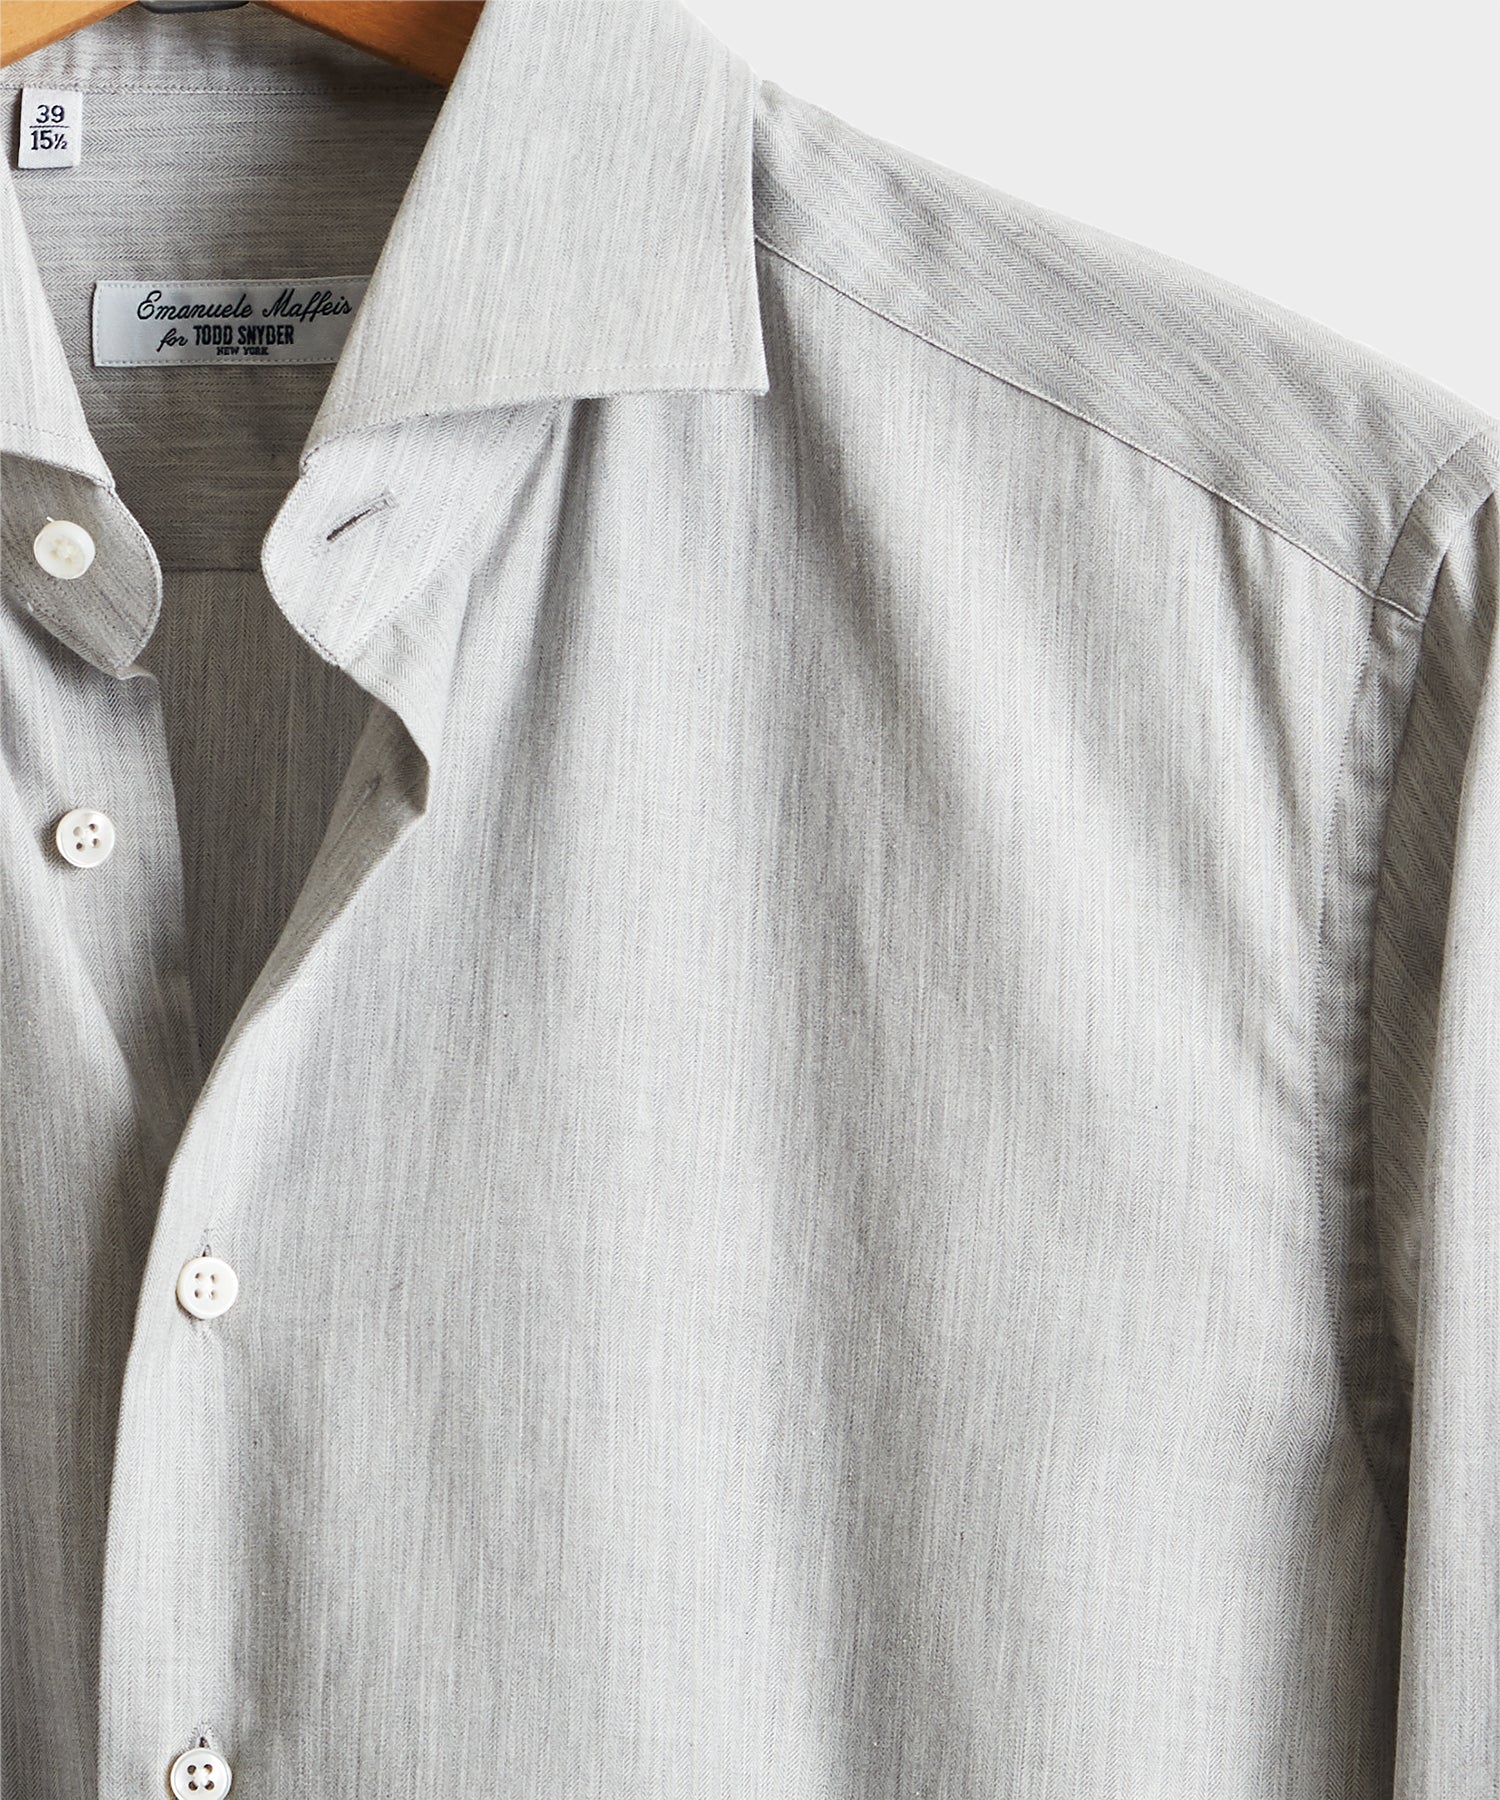 Camiceria E. Maffeis Solid Cotton Shirt in Grey - Todd Snyder